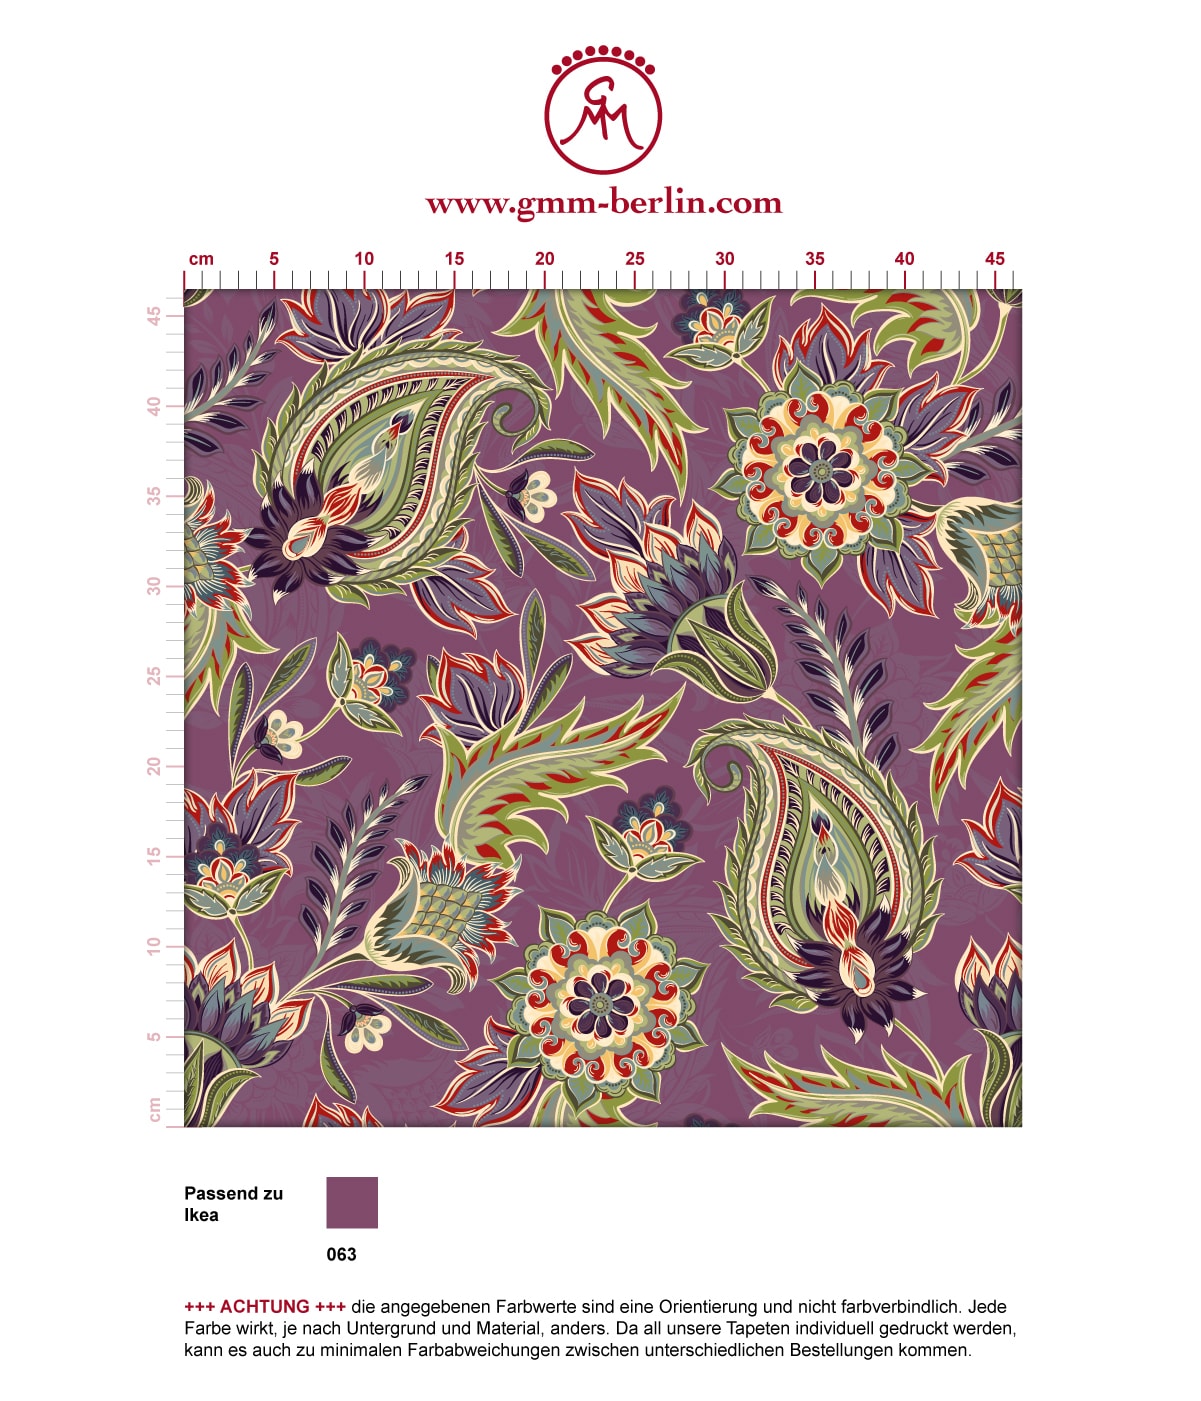 Lila edle Designer Tapete "Classic Paisley" mit dekorativem Blatt Muster (klein) angepasst an Ikea Wandfarben. Aus dem GMM-BERLIN.com Sortiment: Schöne Tapeten in der Farbe: violett